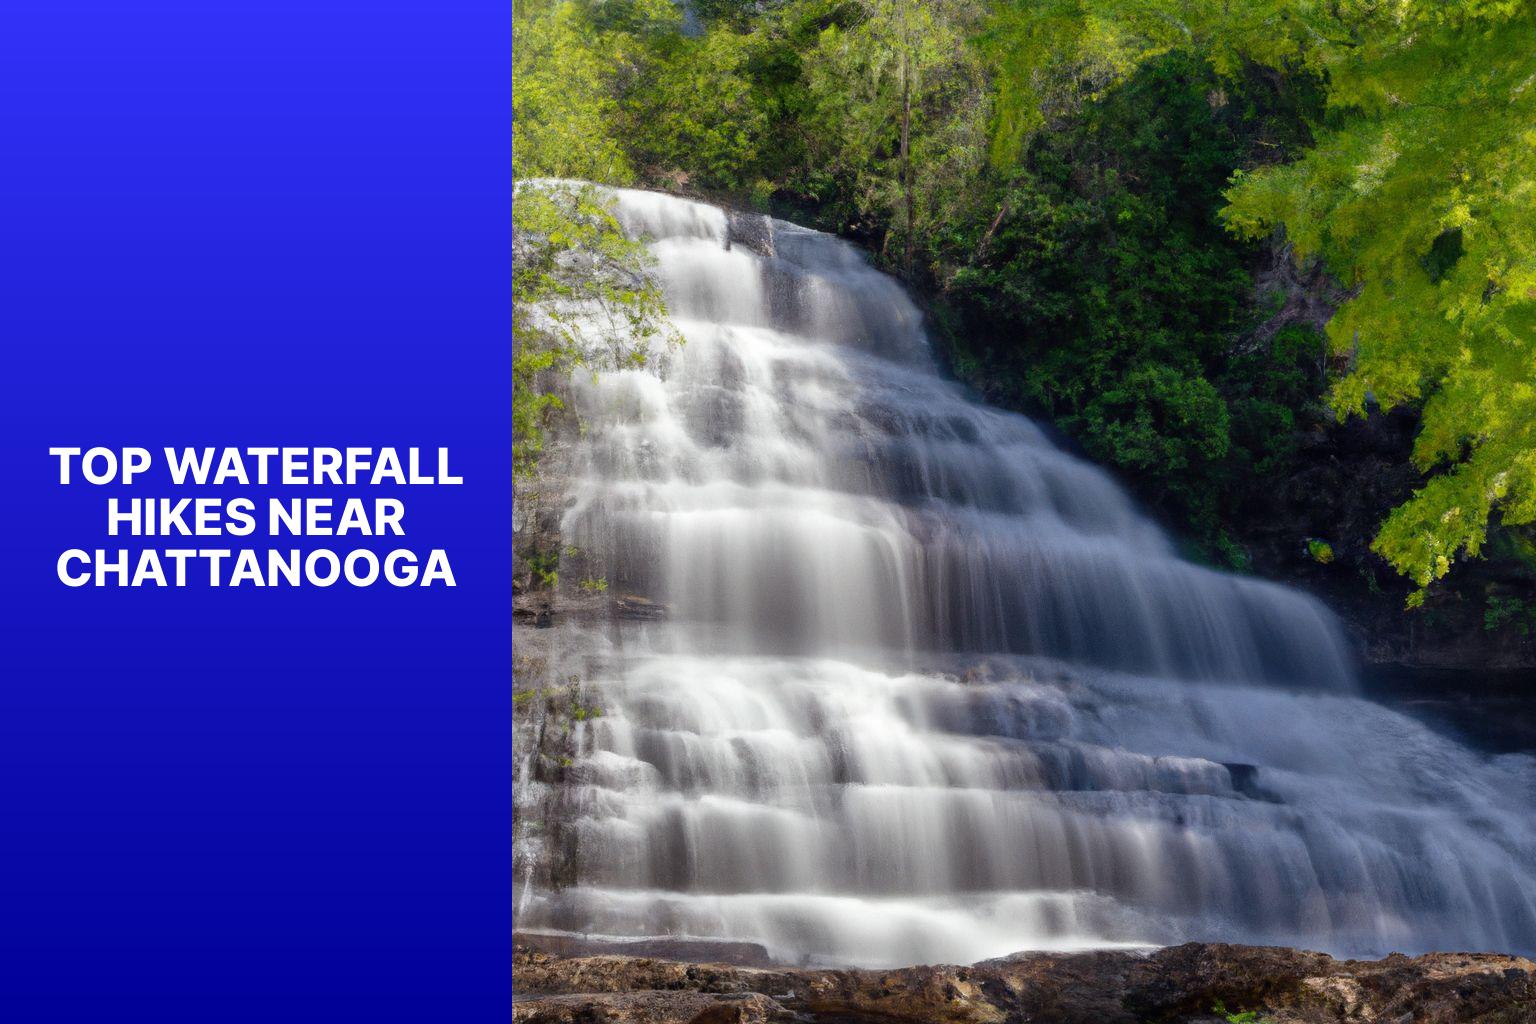 Top Waterfall Hikes Near Chattanooga - Waterfall Hikes Near Chattanooga 